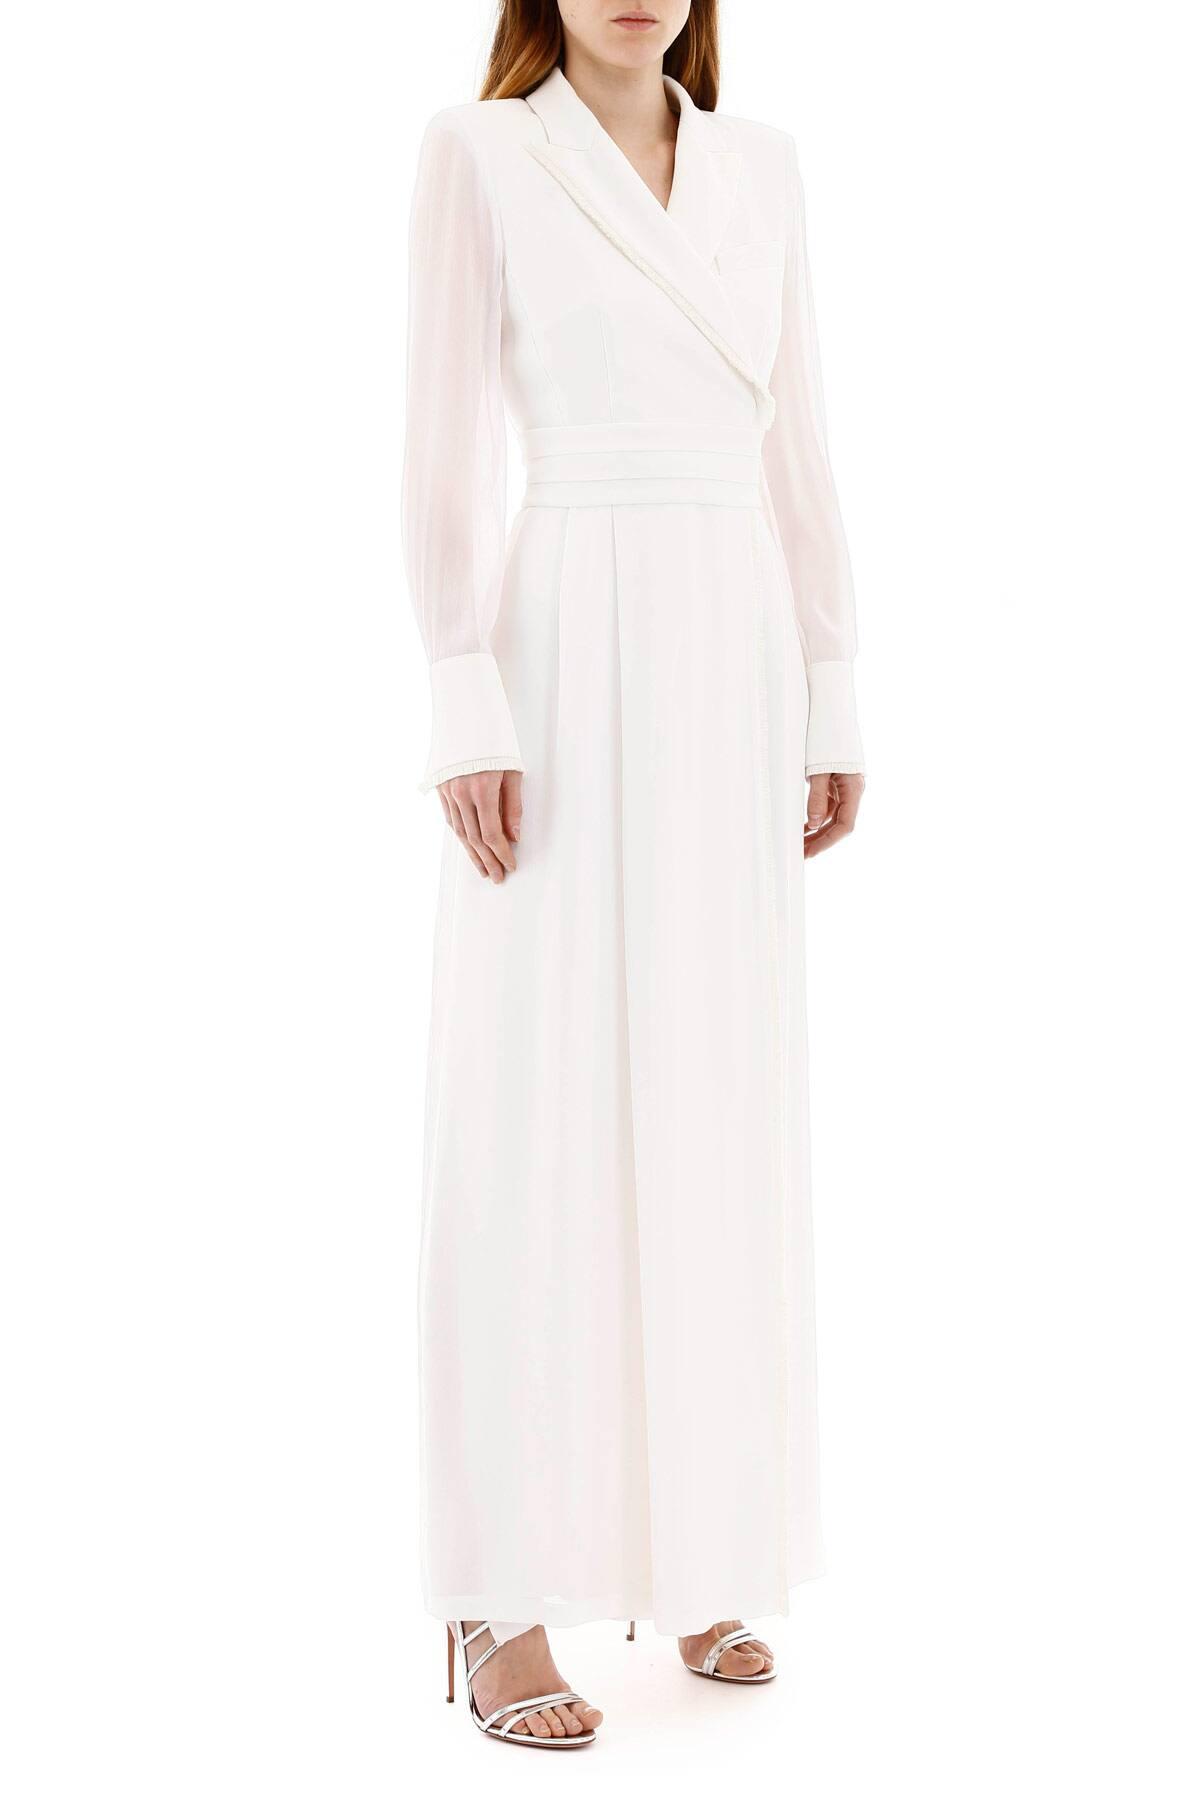 Max Mara Silk Gemma Long Dress in White - Lyst